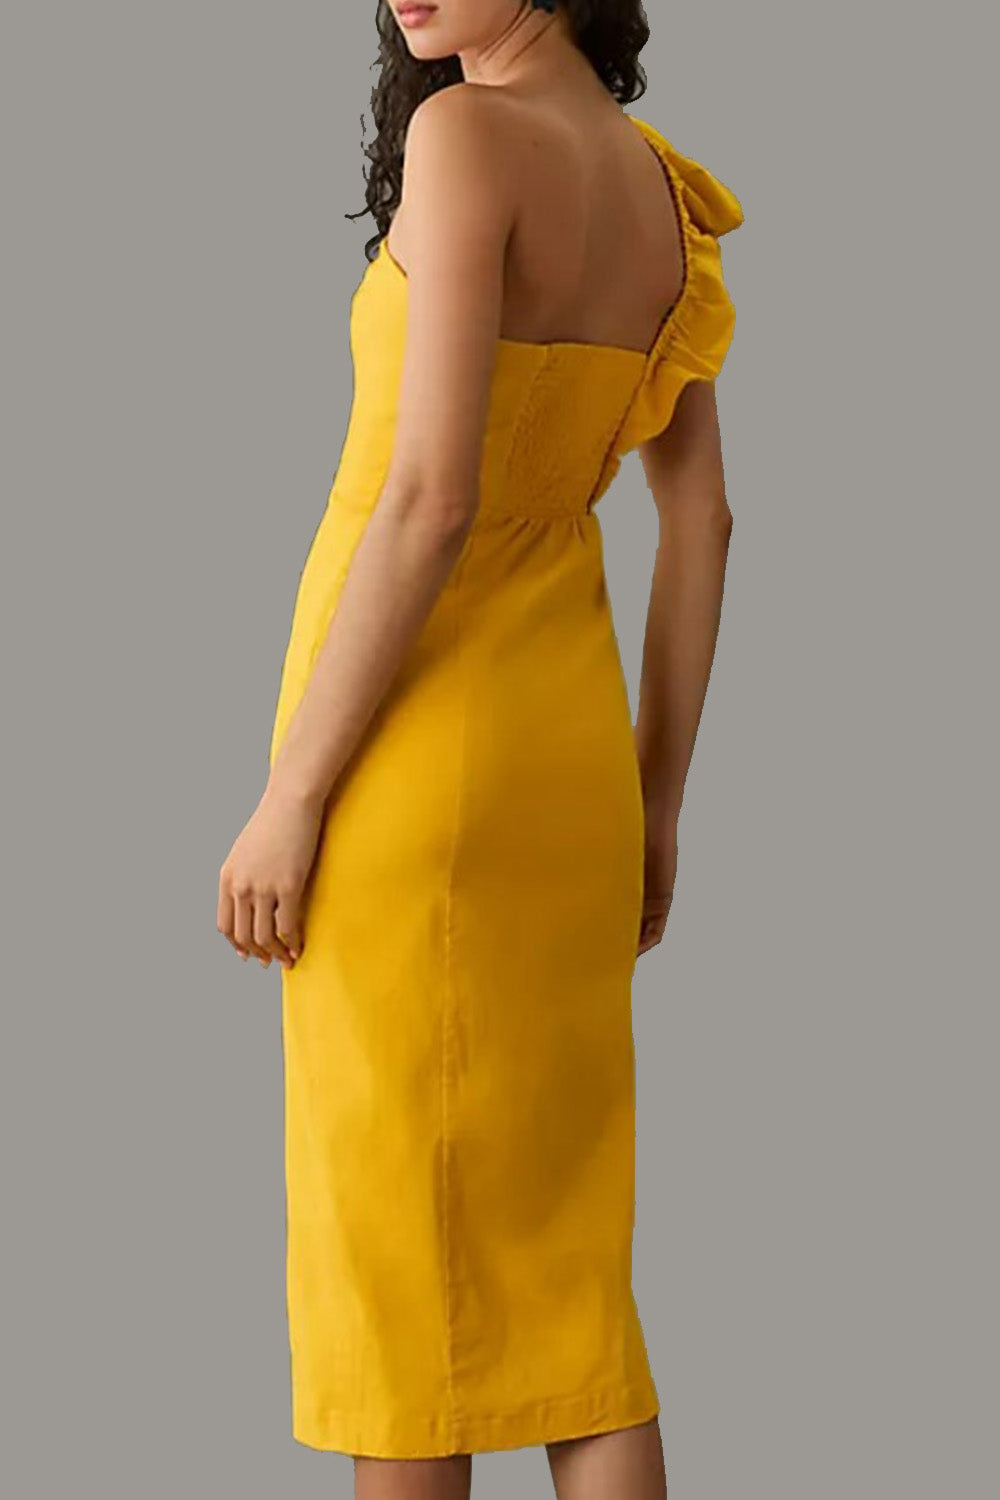 Winsome Yellow Dress